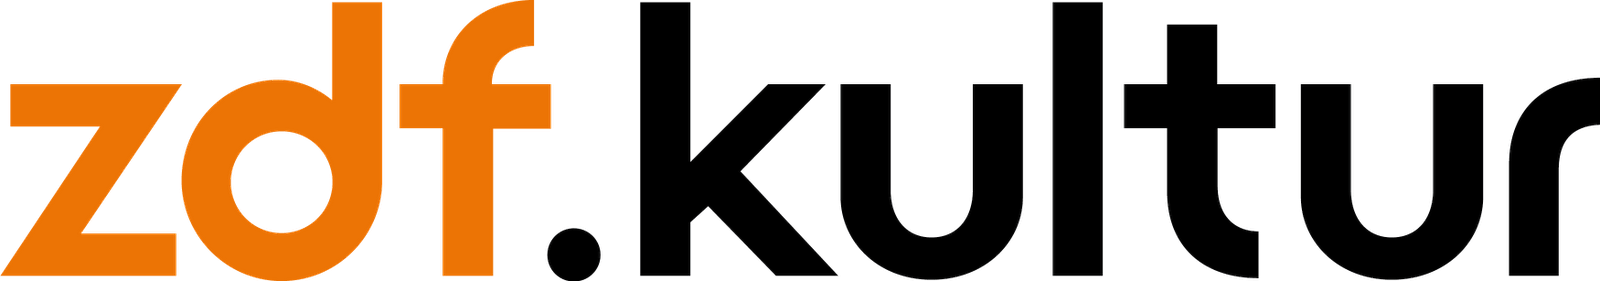 The Branding Source: New logo: zdf.kultur